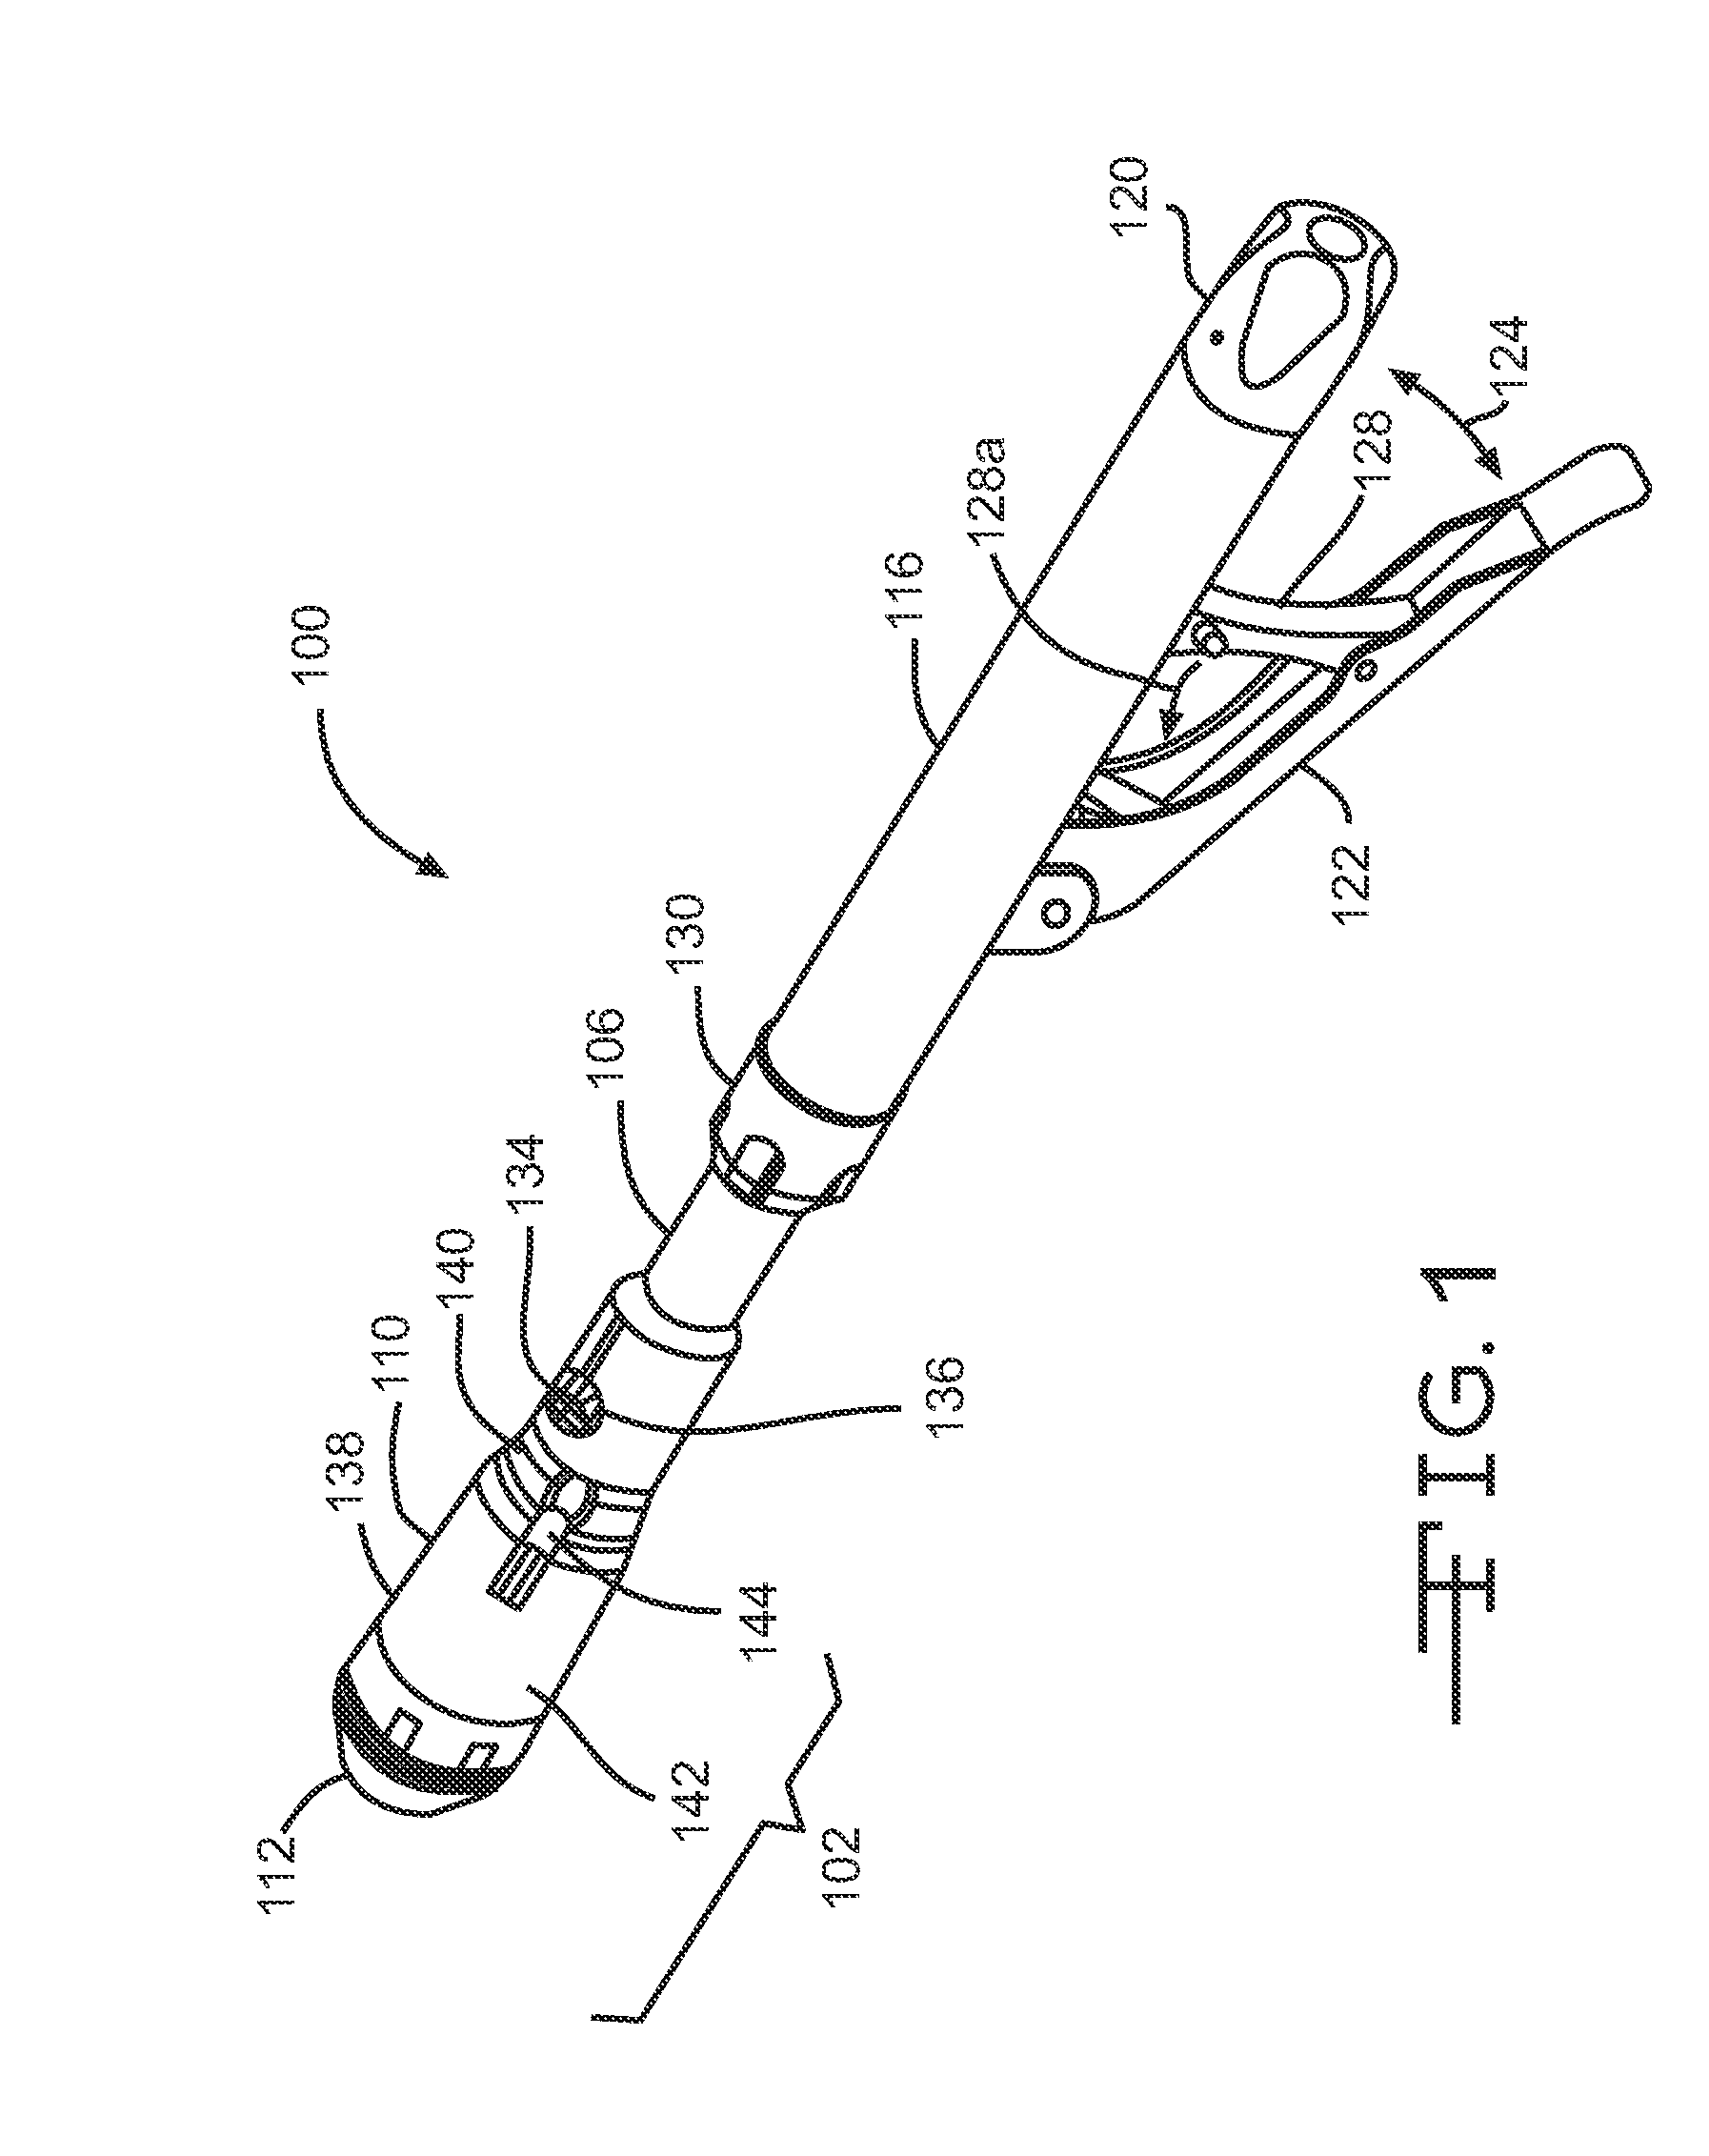 Circular stapler with automatic locking mechanism